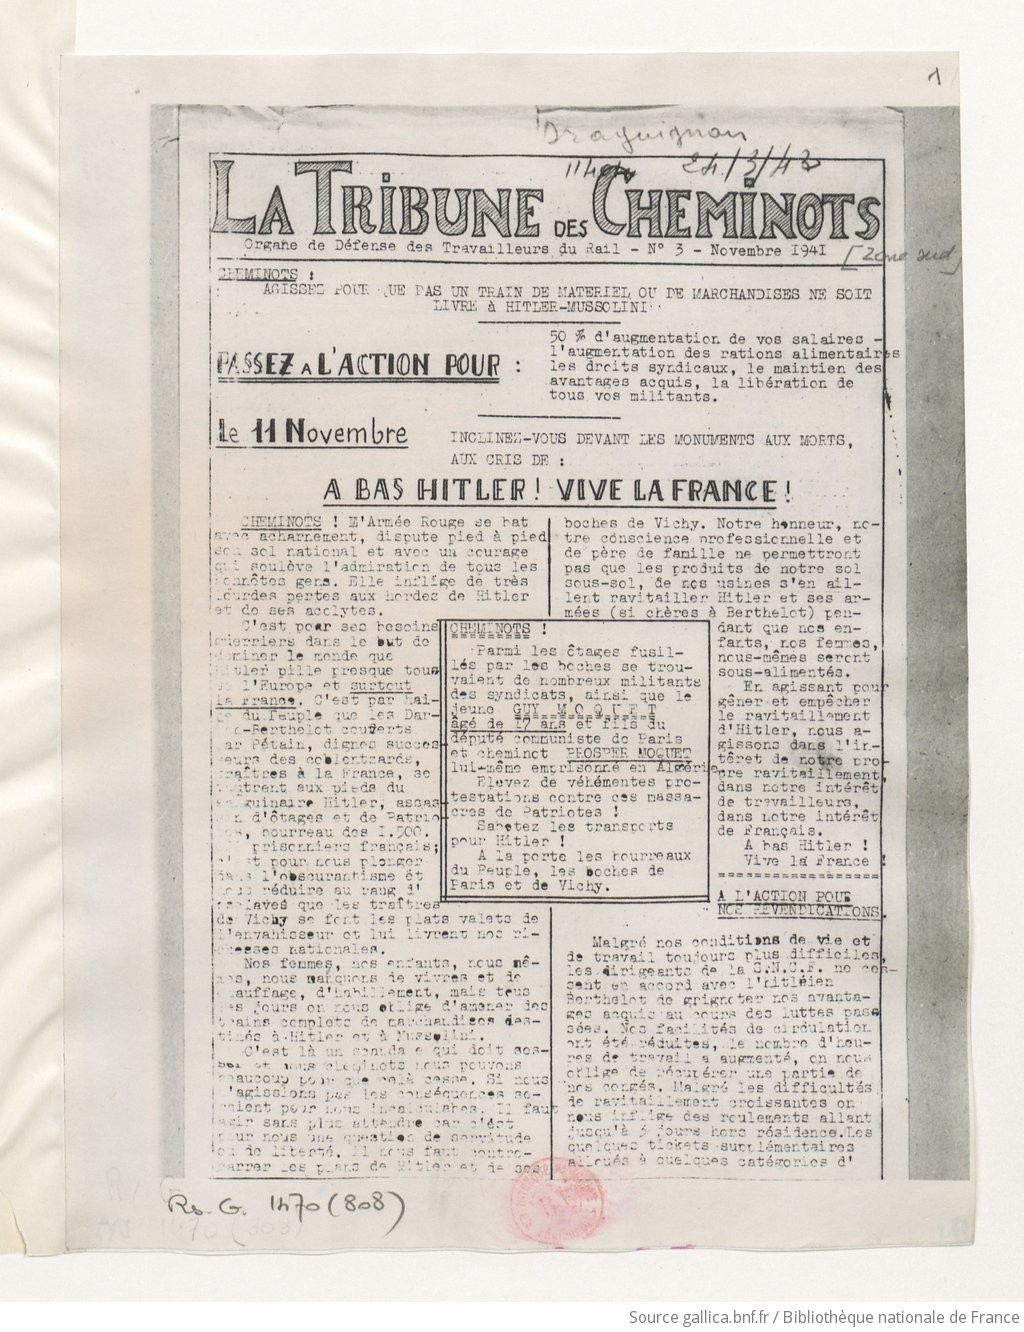 La Tribune des cheminots [clandestine], n°3, novembre 1941